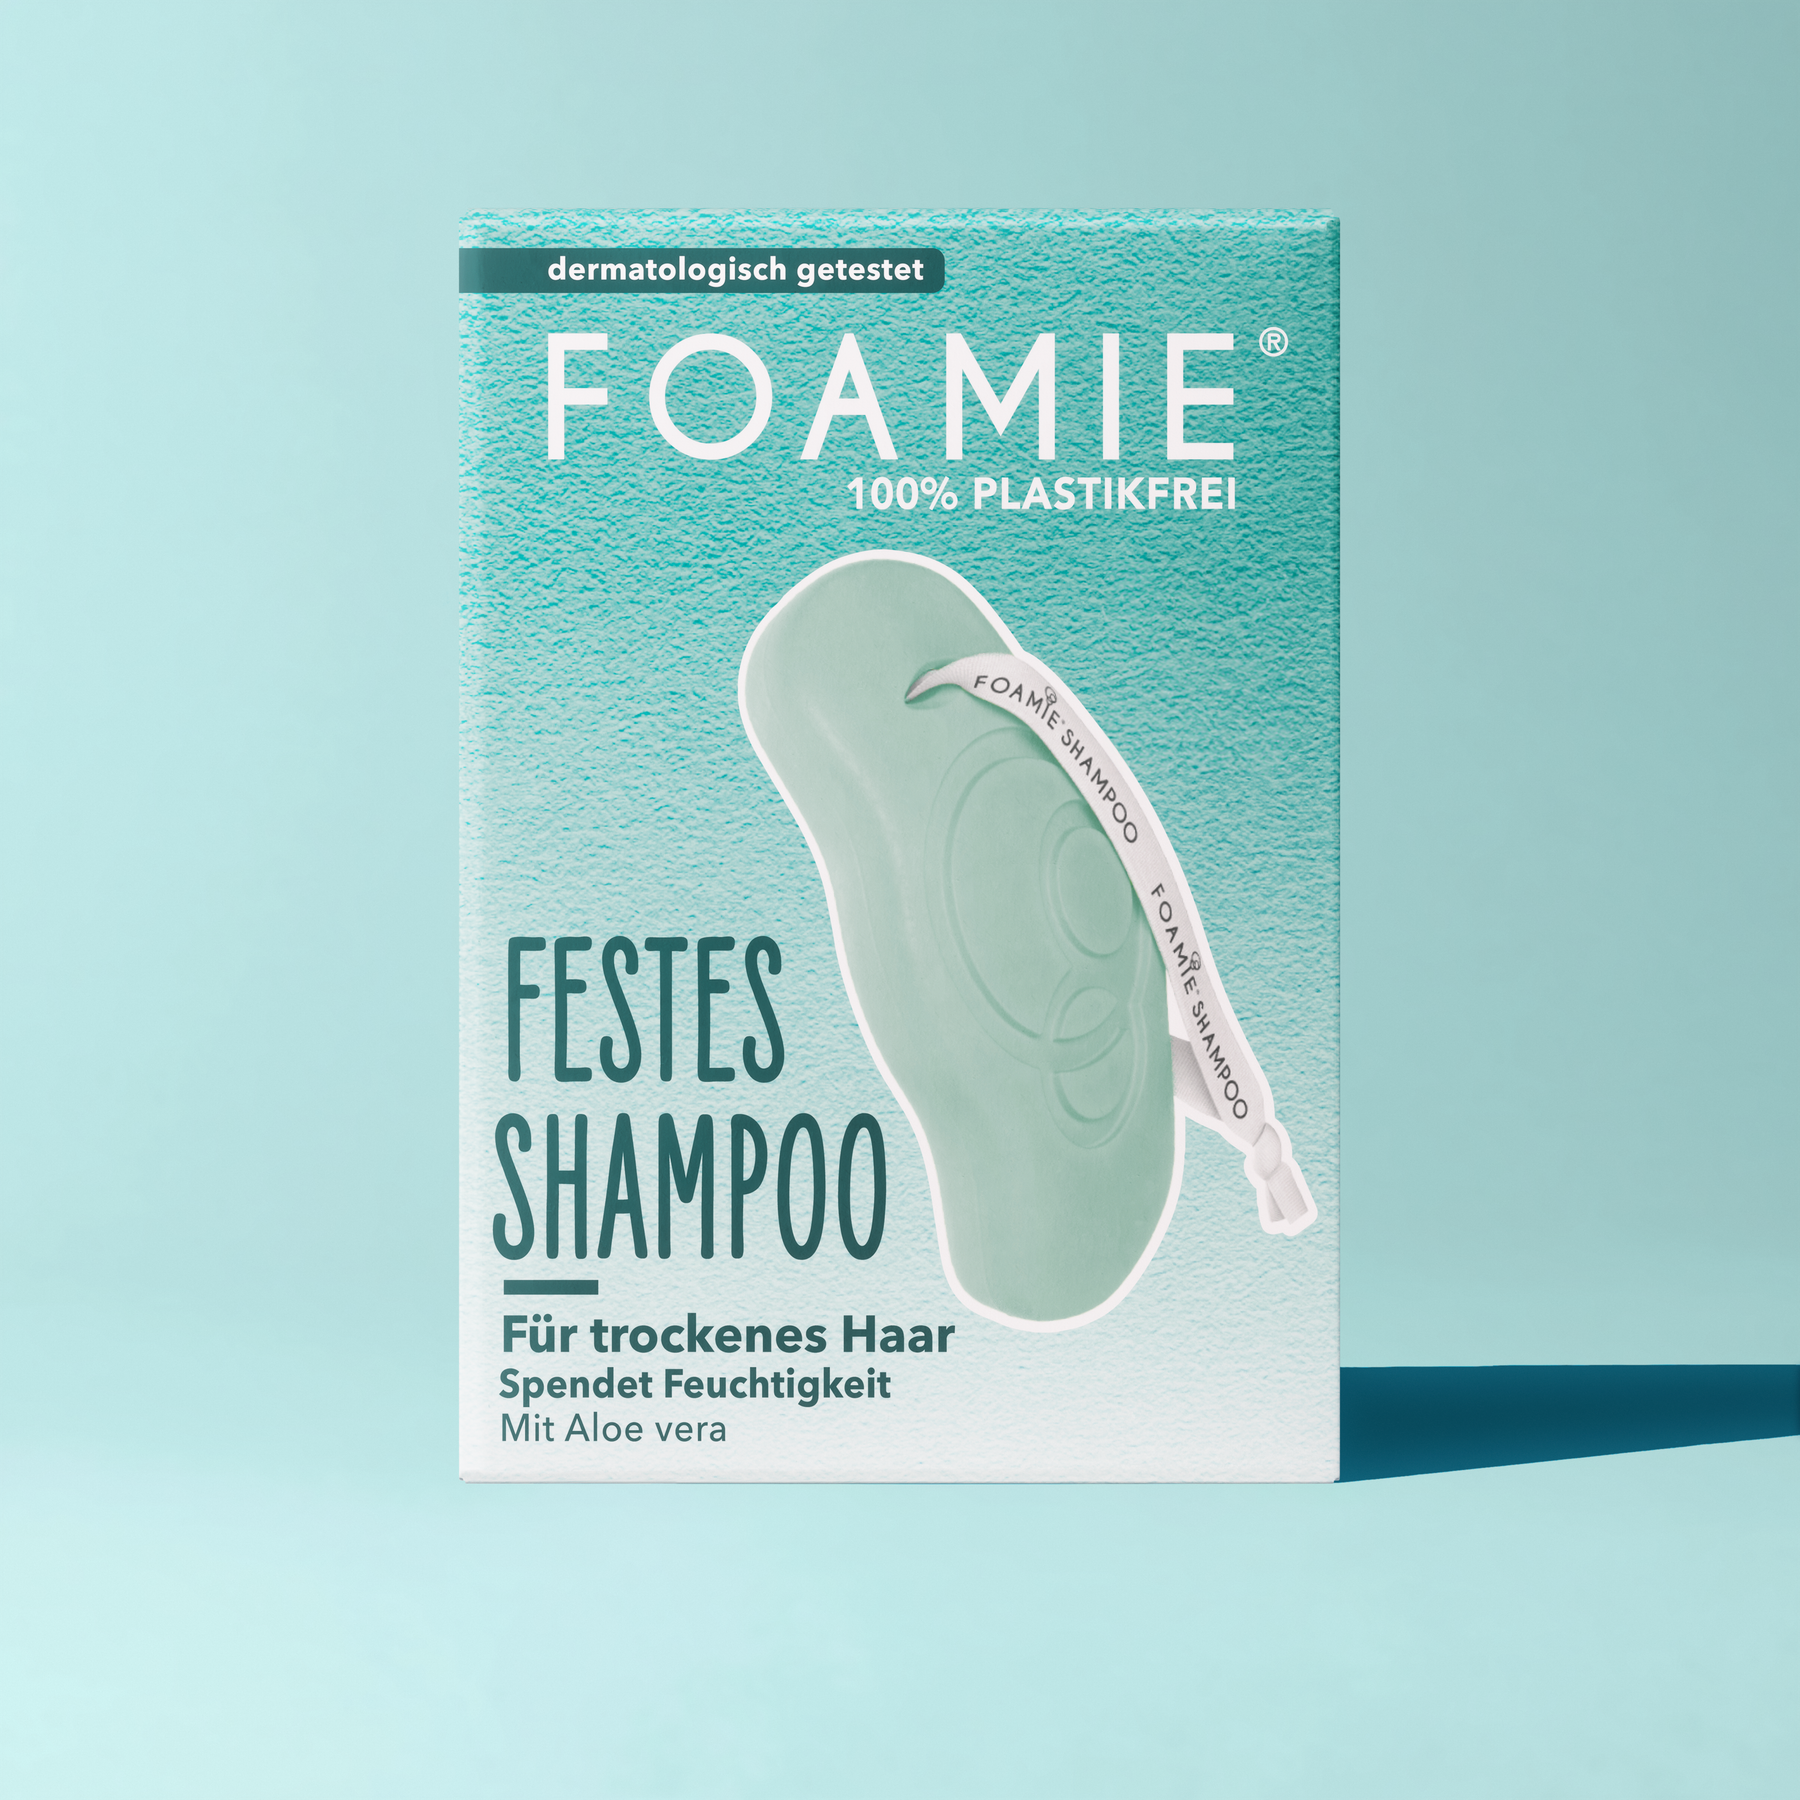 Festes Shampoo für trockenes Haar Shop Online Foamie Offizieller Online Shop Foamie | – – Offizieller